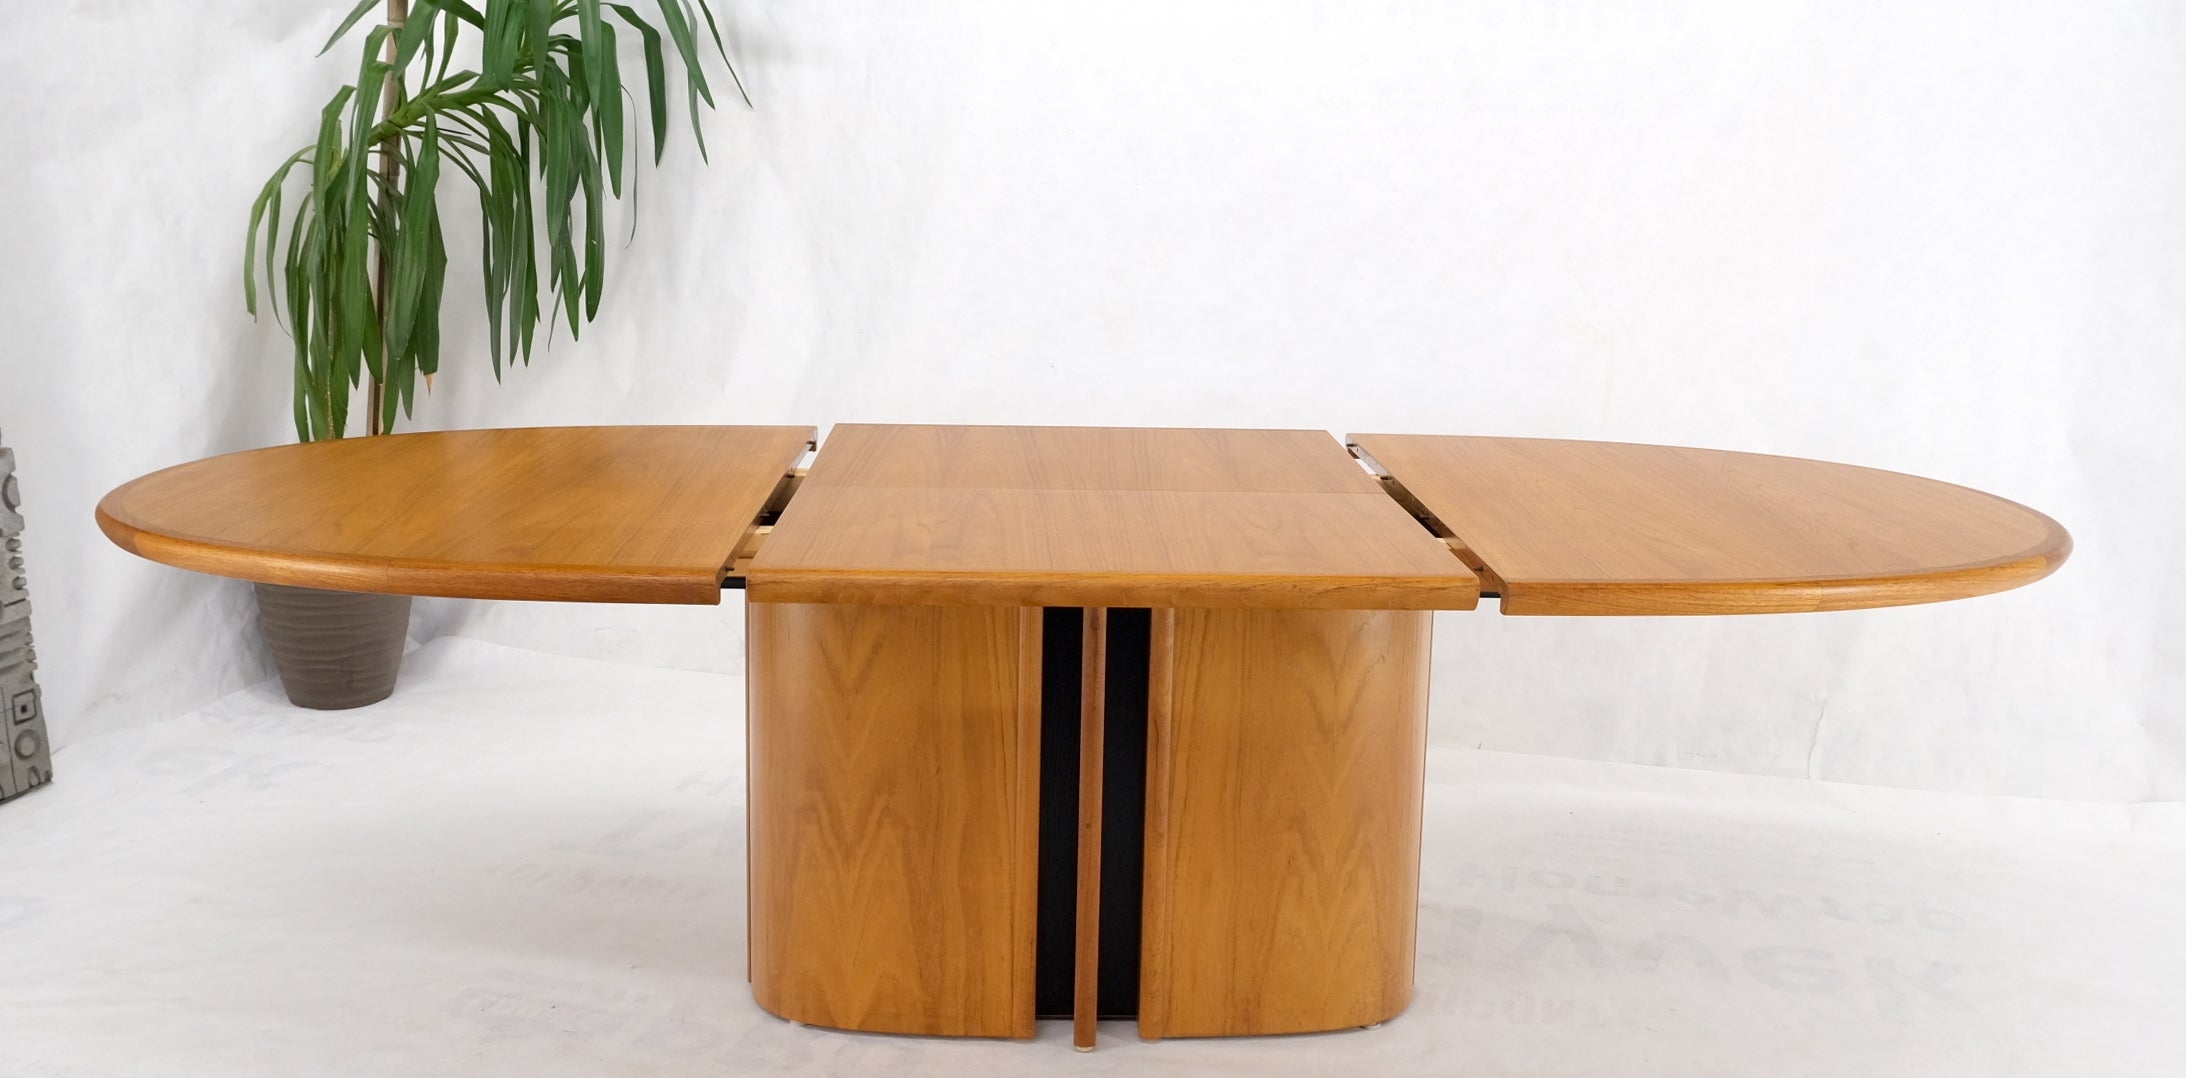 Danish Mid-Century Modern oval teak dining table w/ pop up leaf extension MINT!
leaf measuring: 1x31.5.